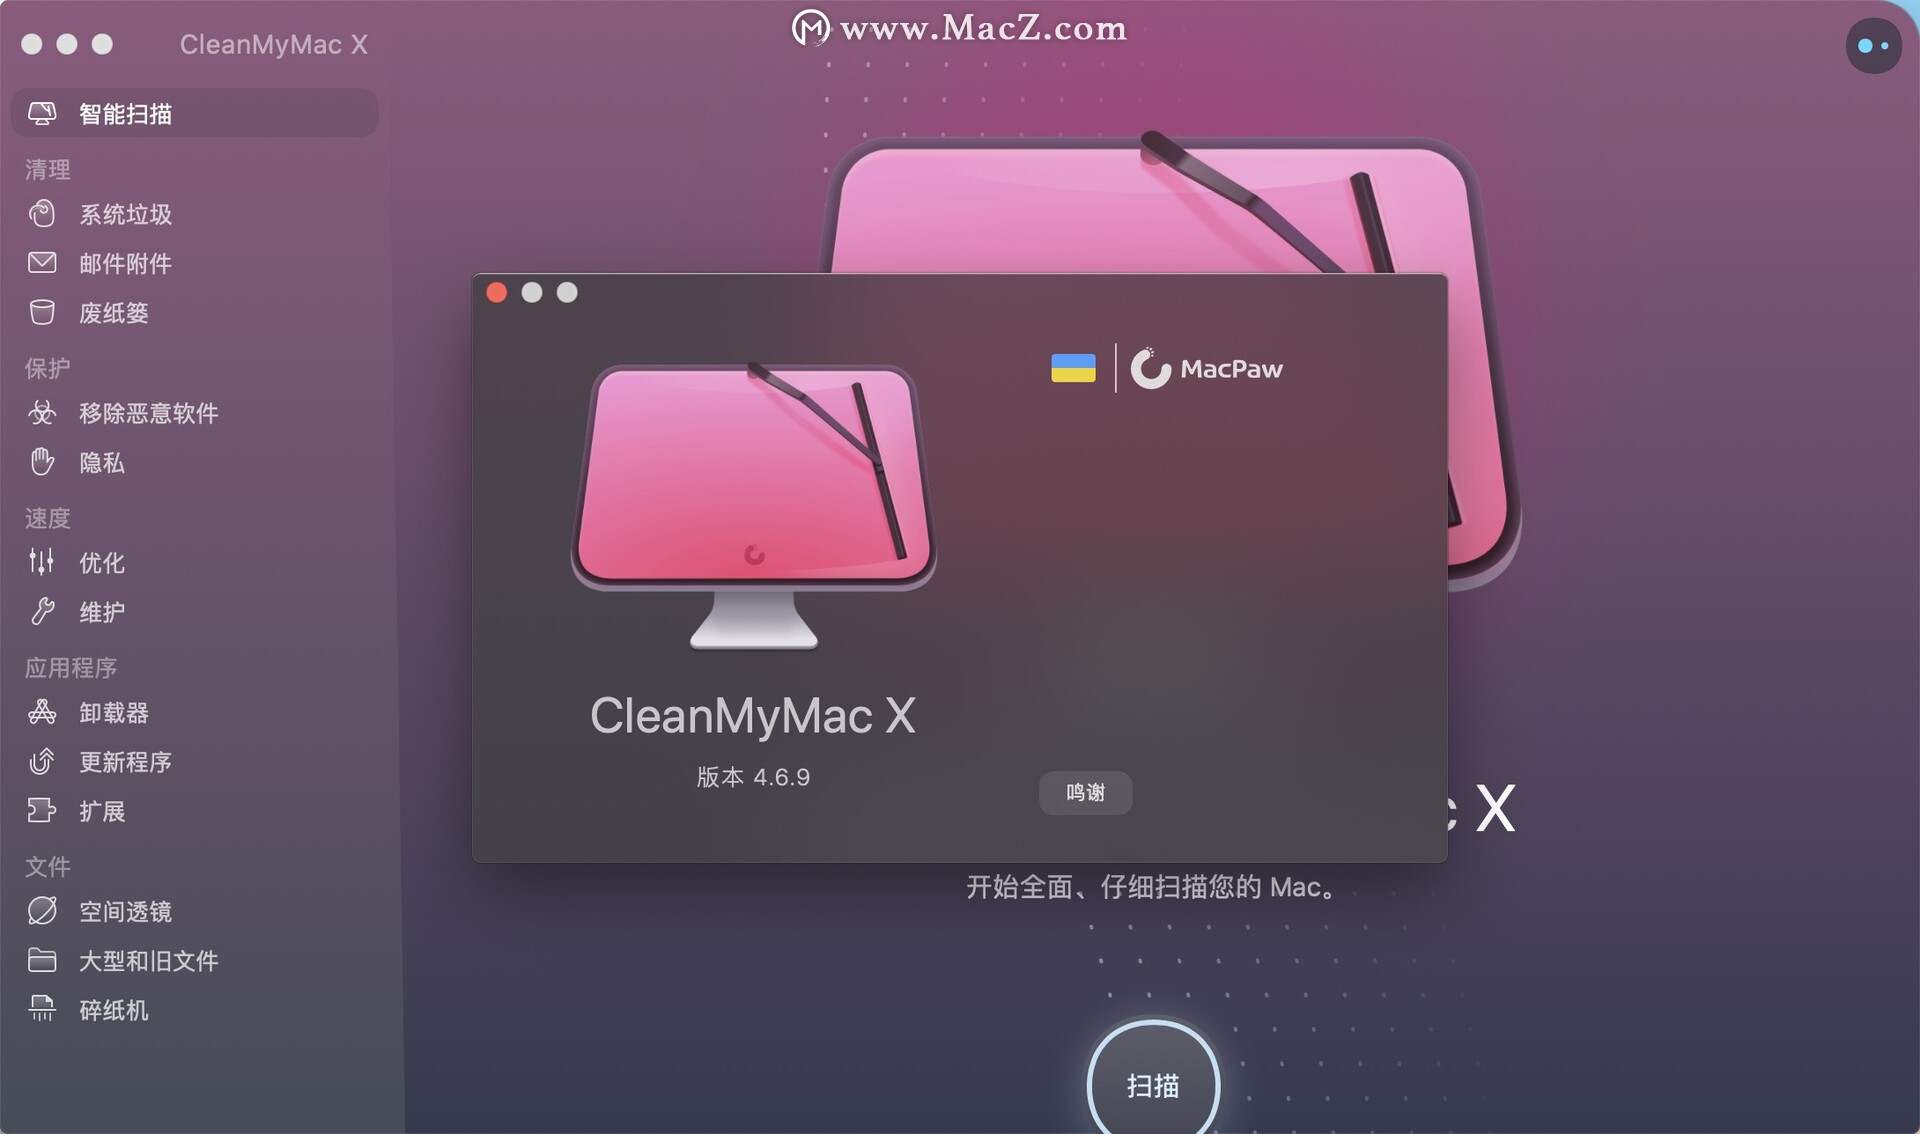 cleanmymac x for mac